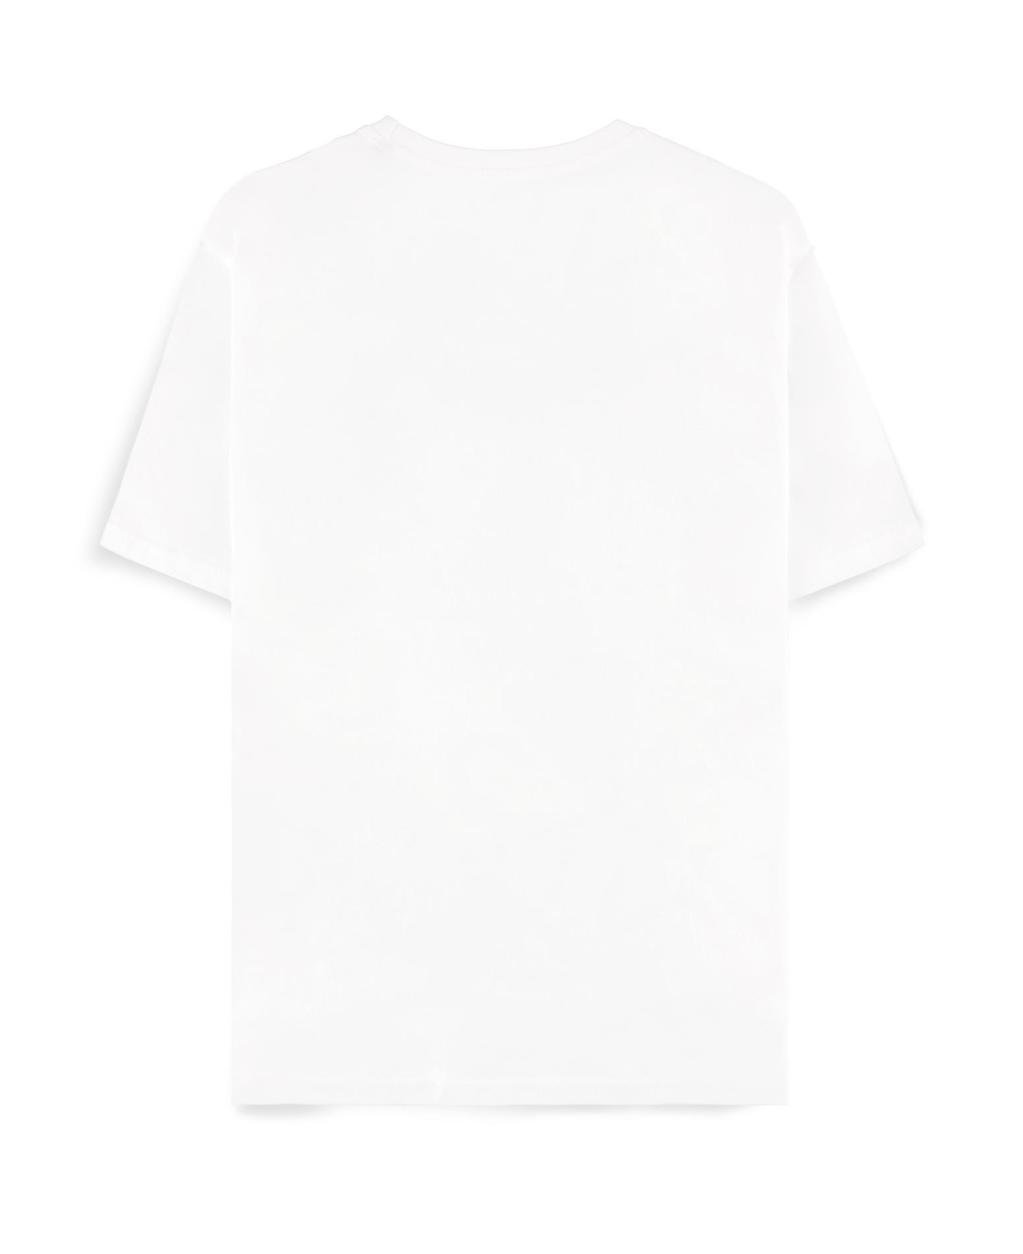 NARUTO Shippuden - Sasuke Symbol - Women's T-shirt (XS)